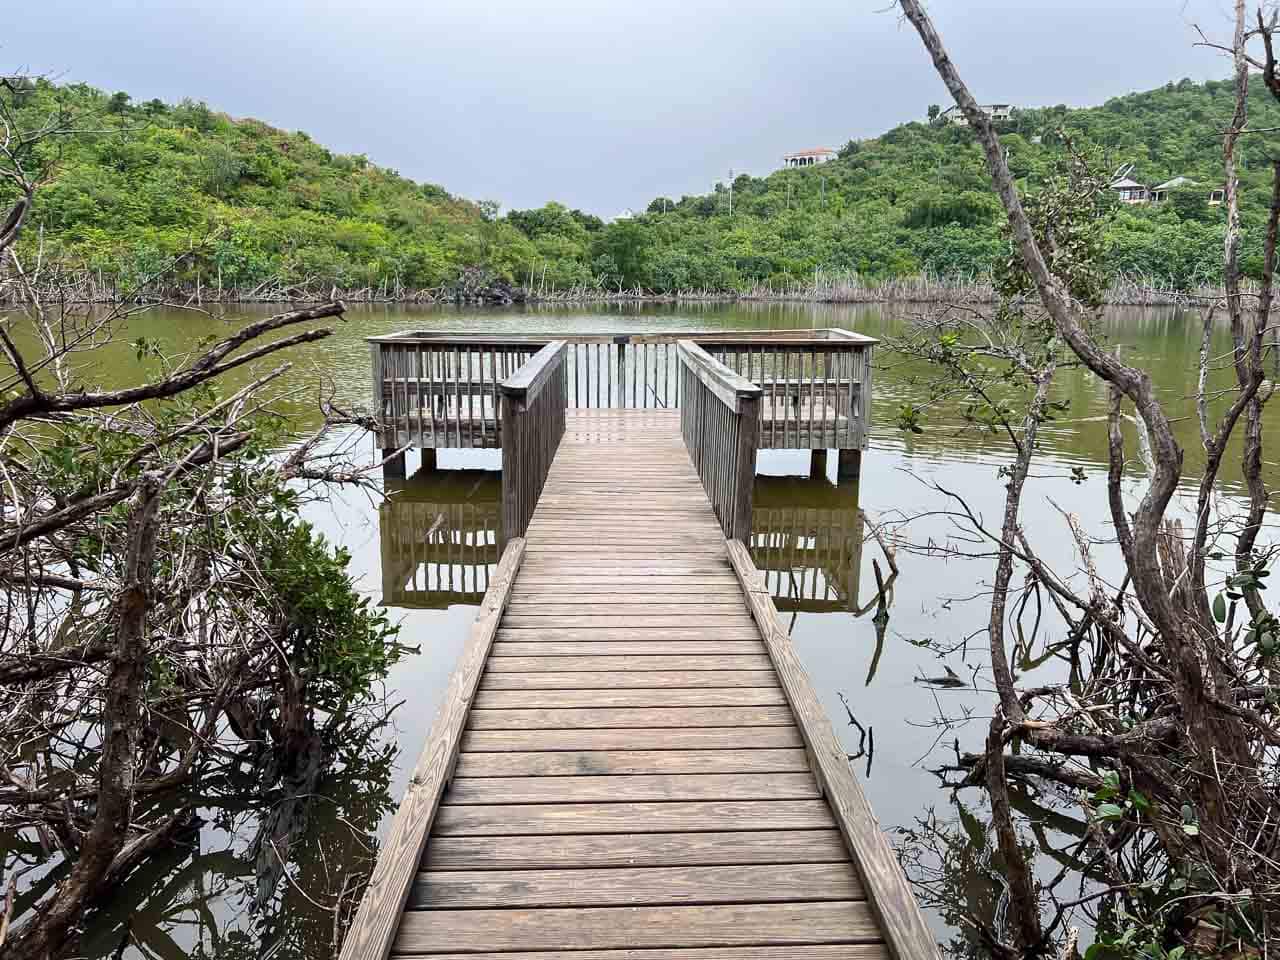 Francis Bay Trail boardwalk viewing platform in Virgin Islands National Park